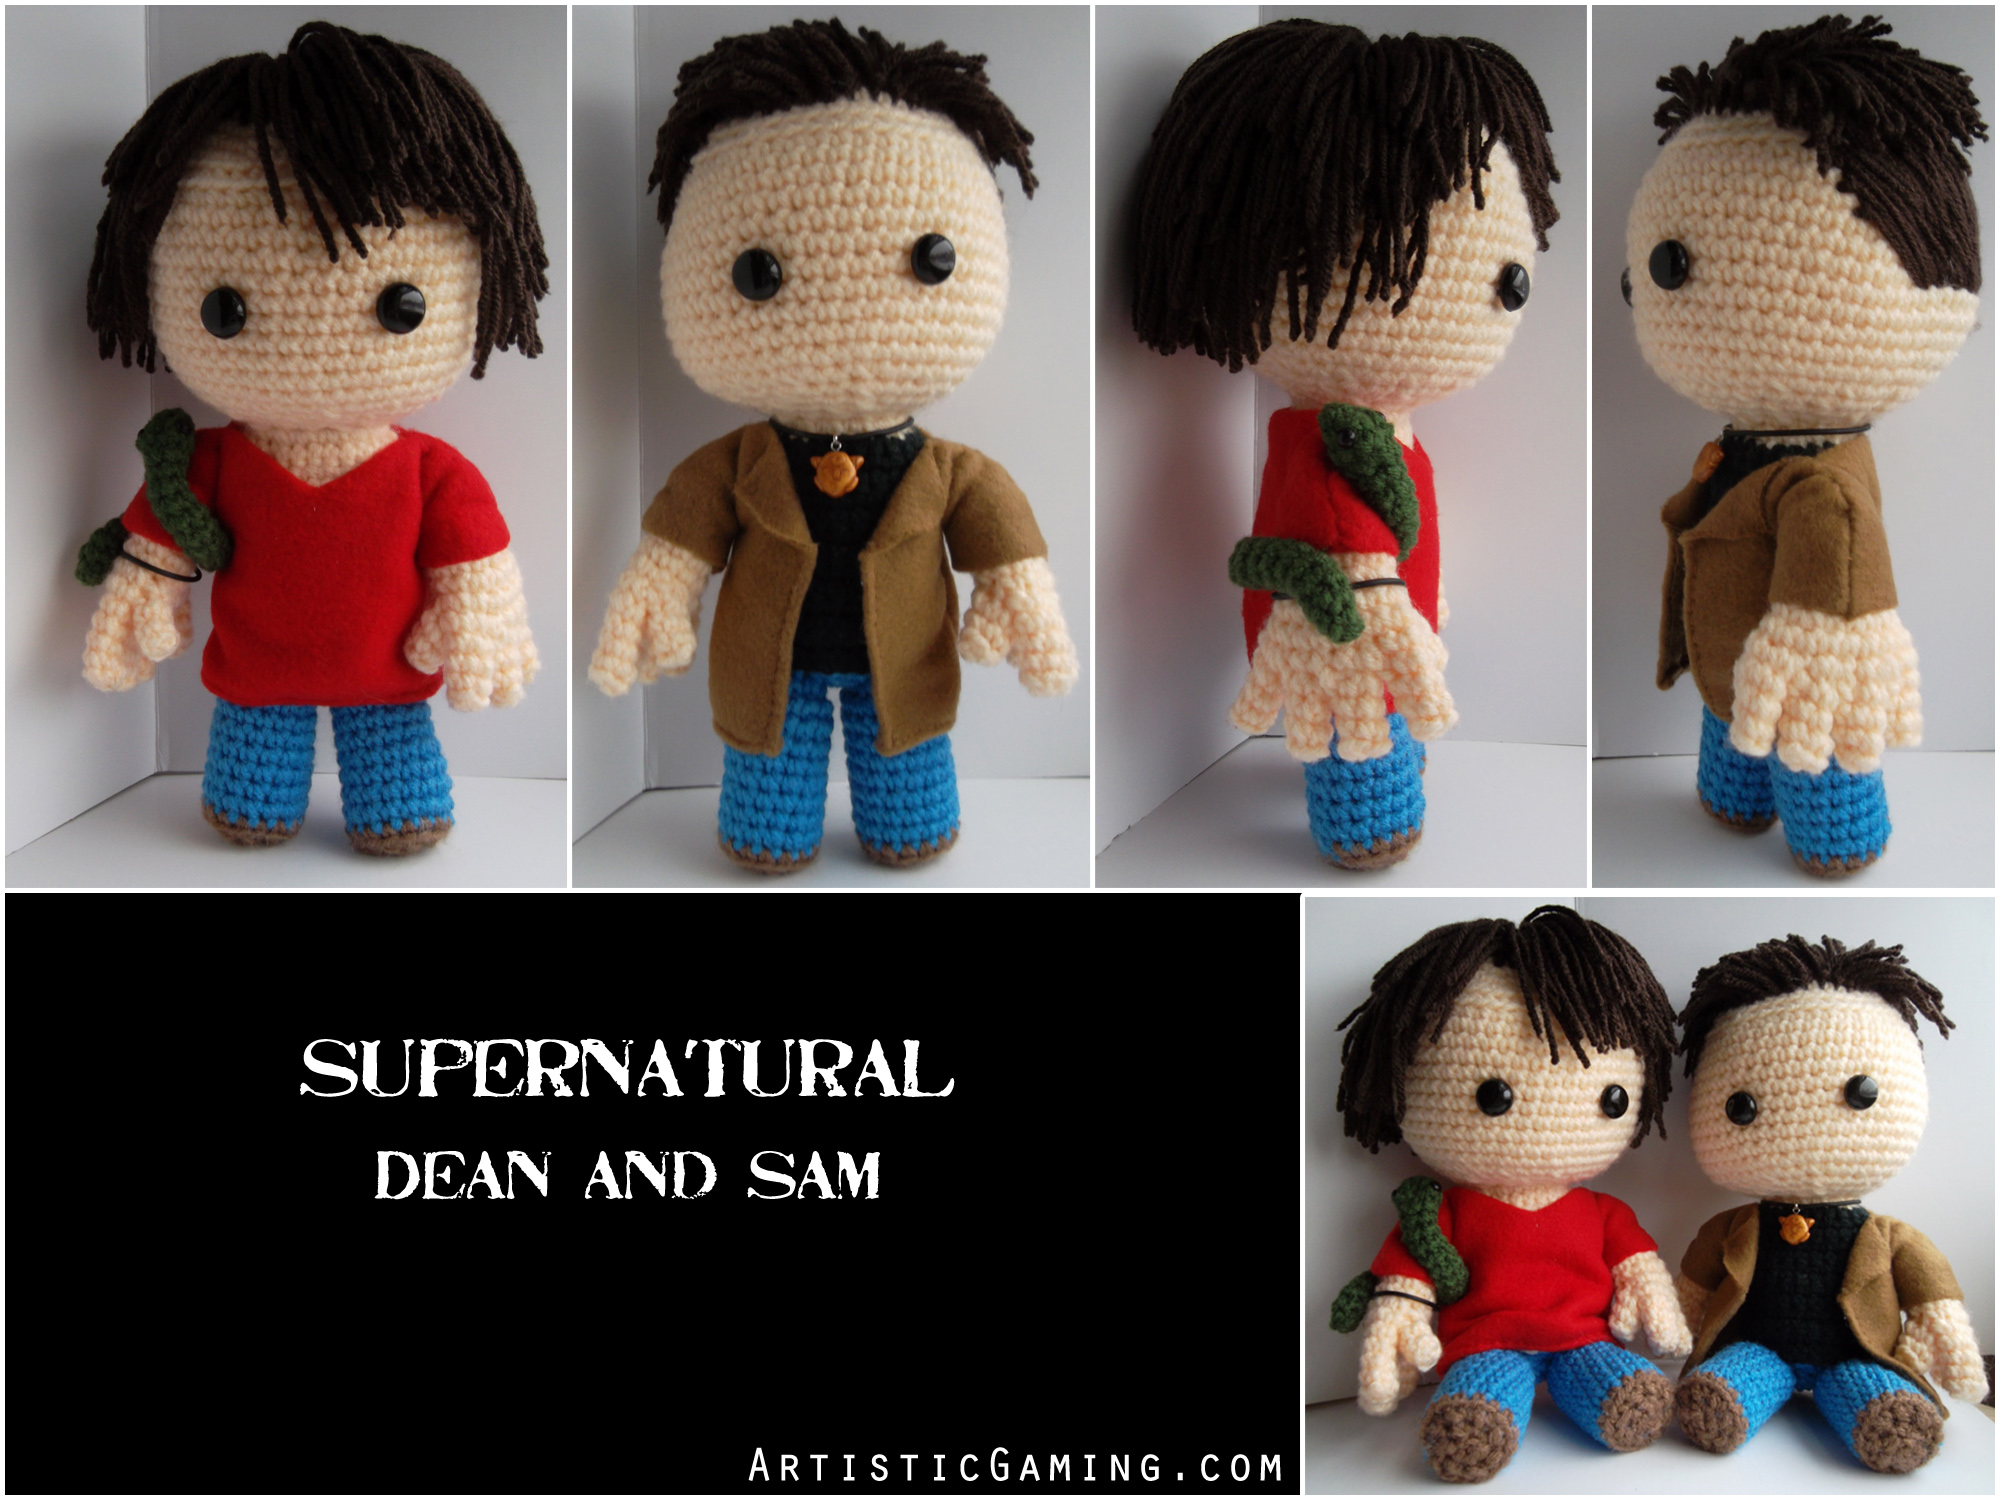 Dean and Sam - Supernatural